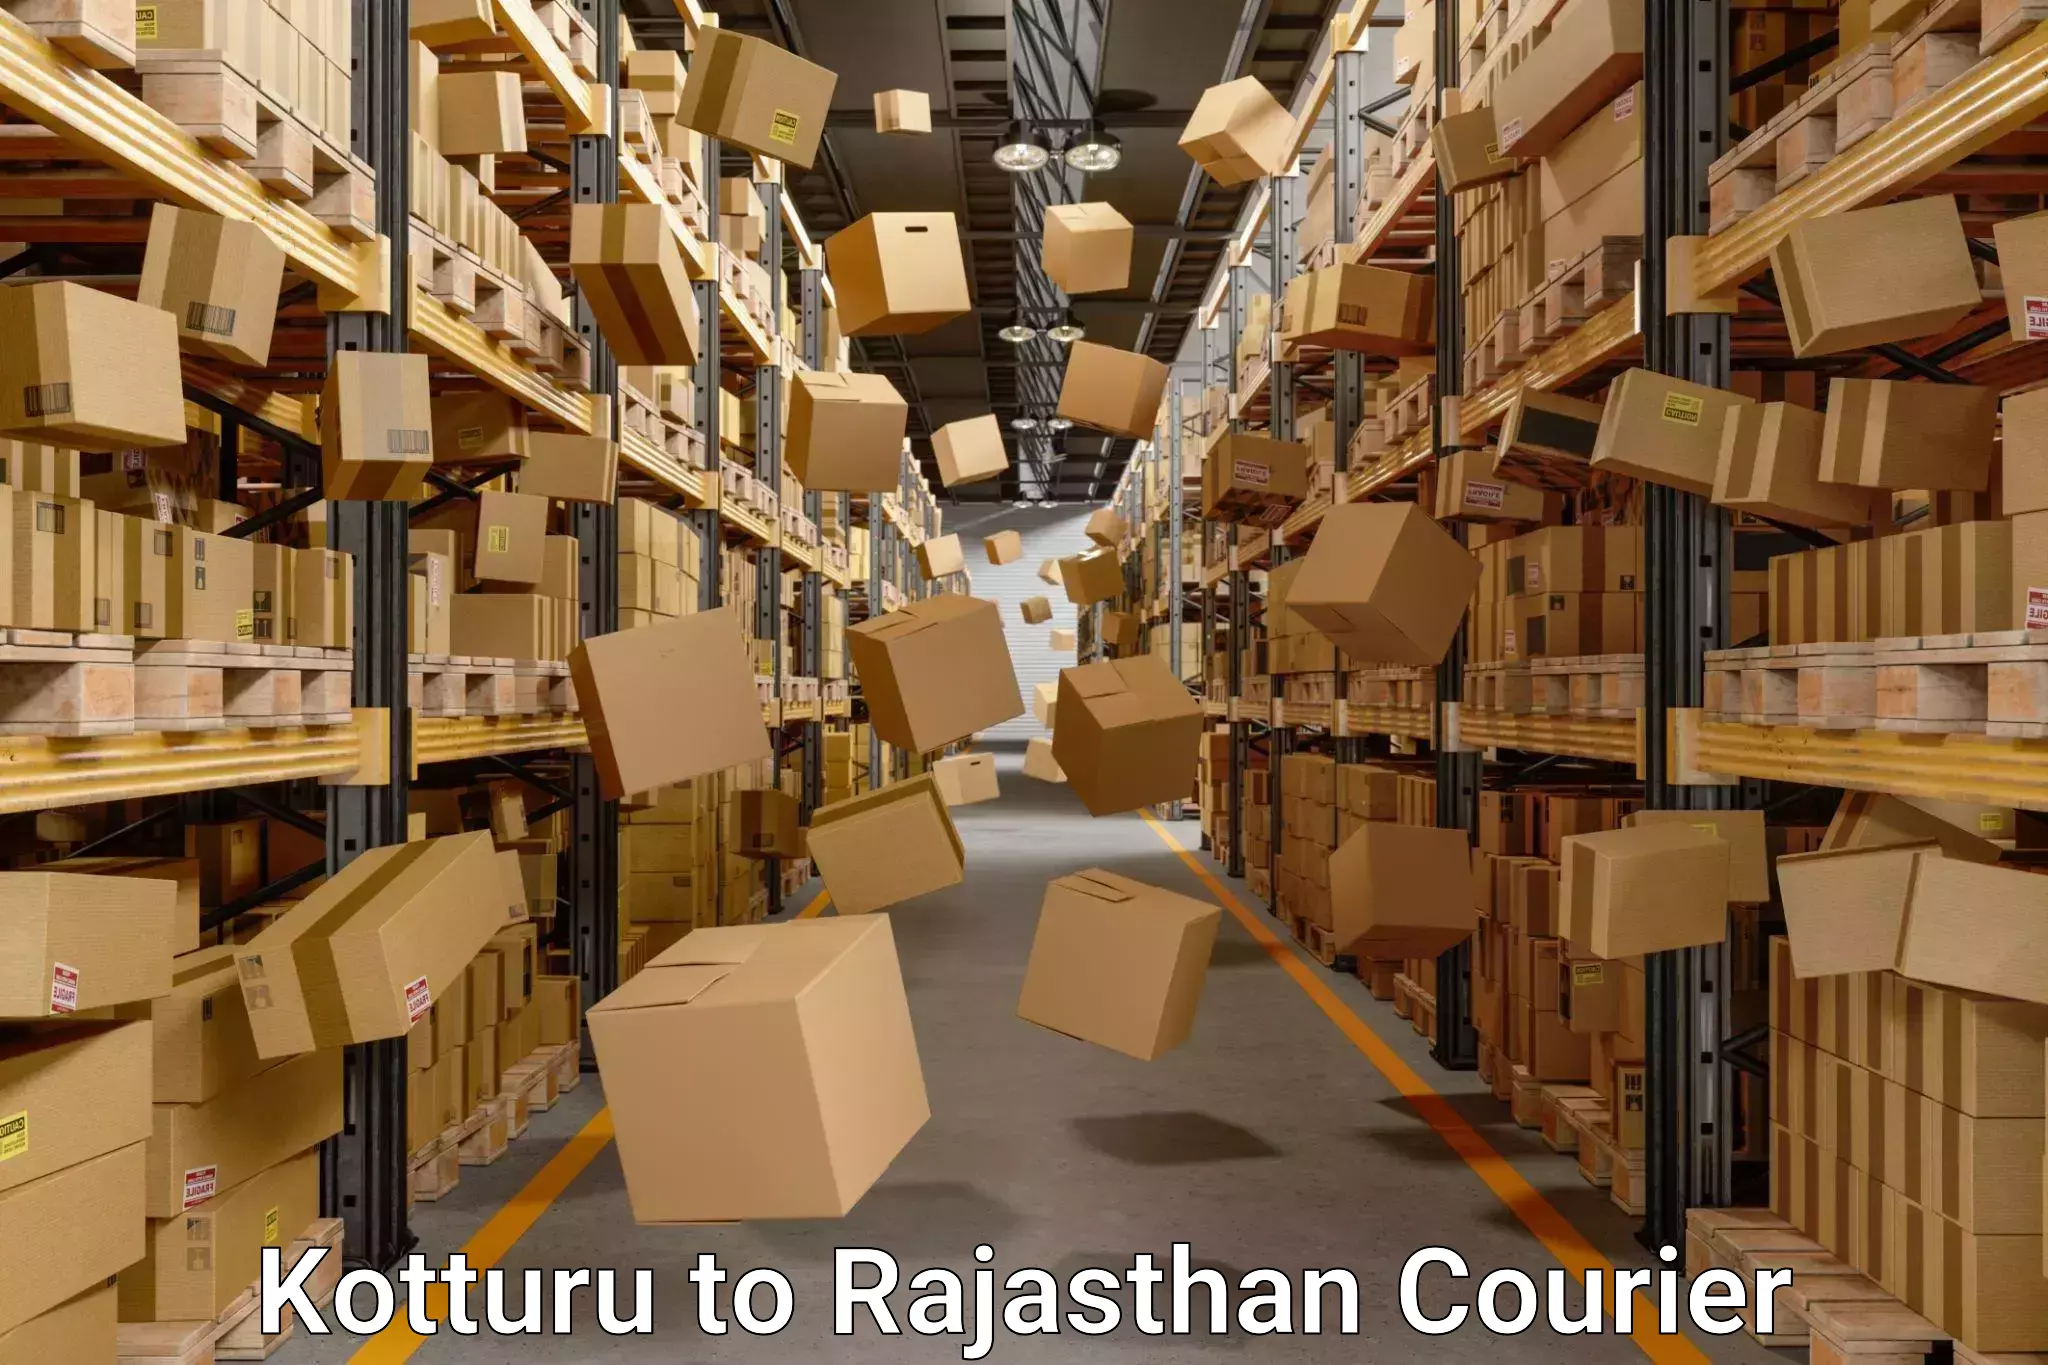 Trusted moving company Kotturu to Sultana